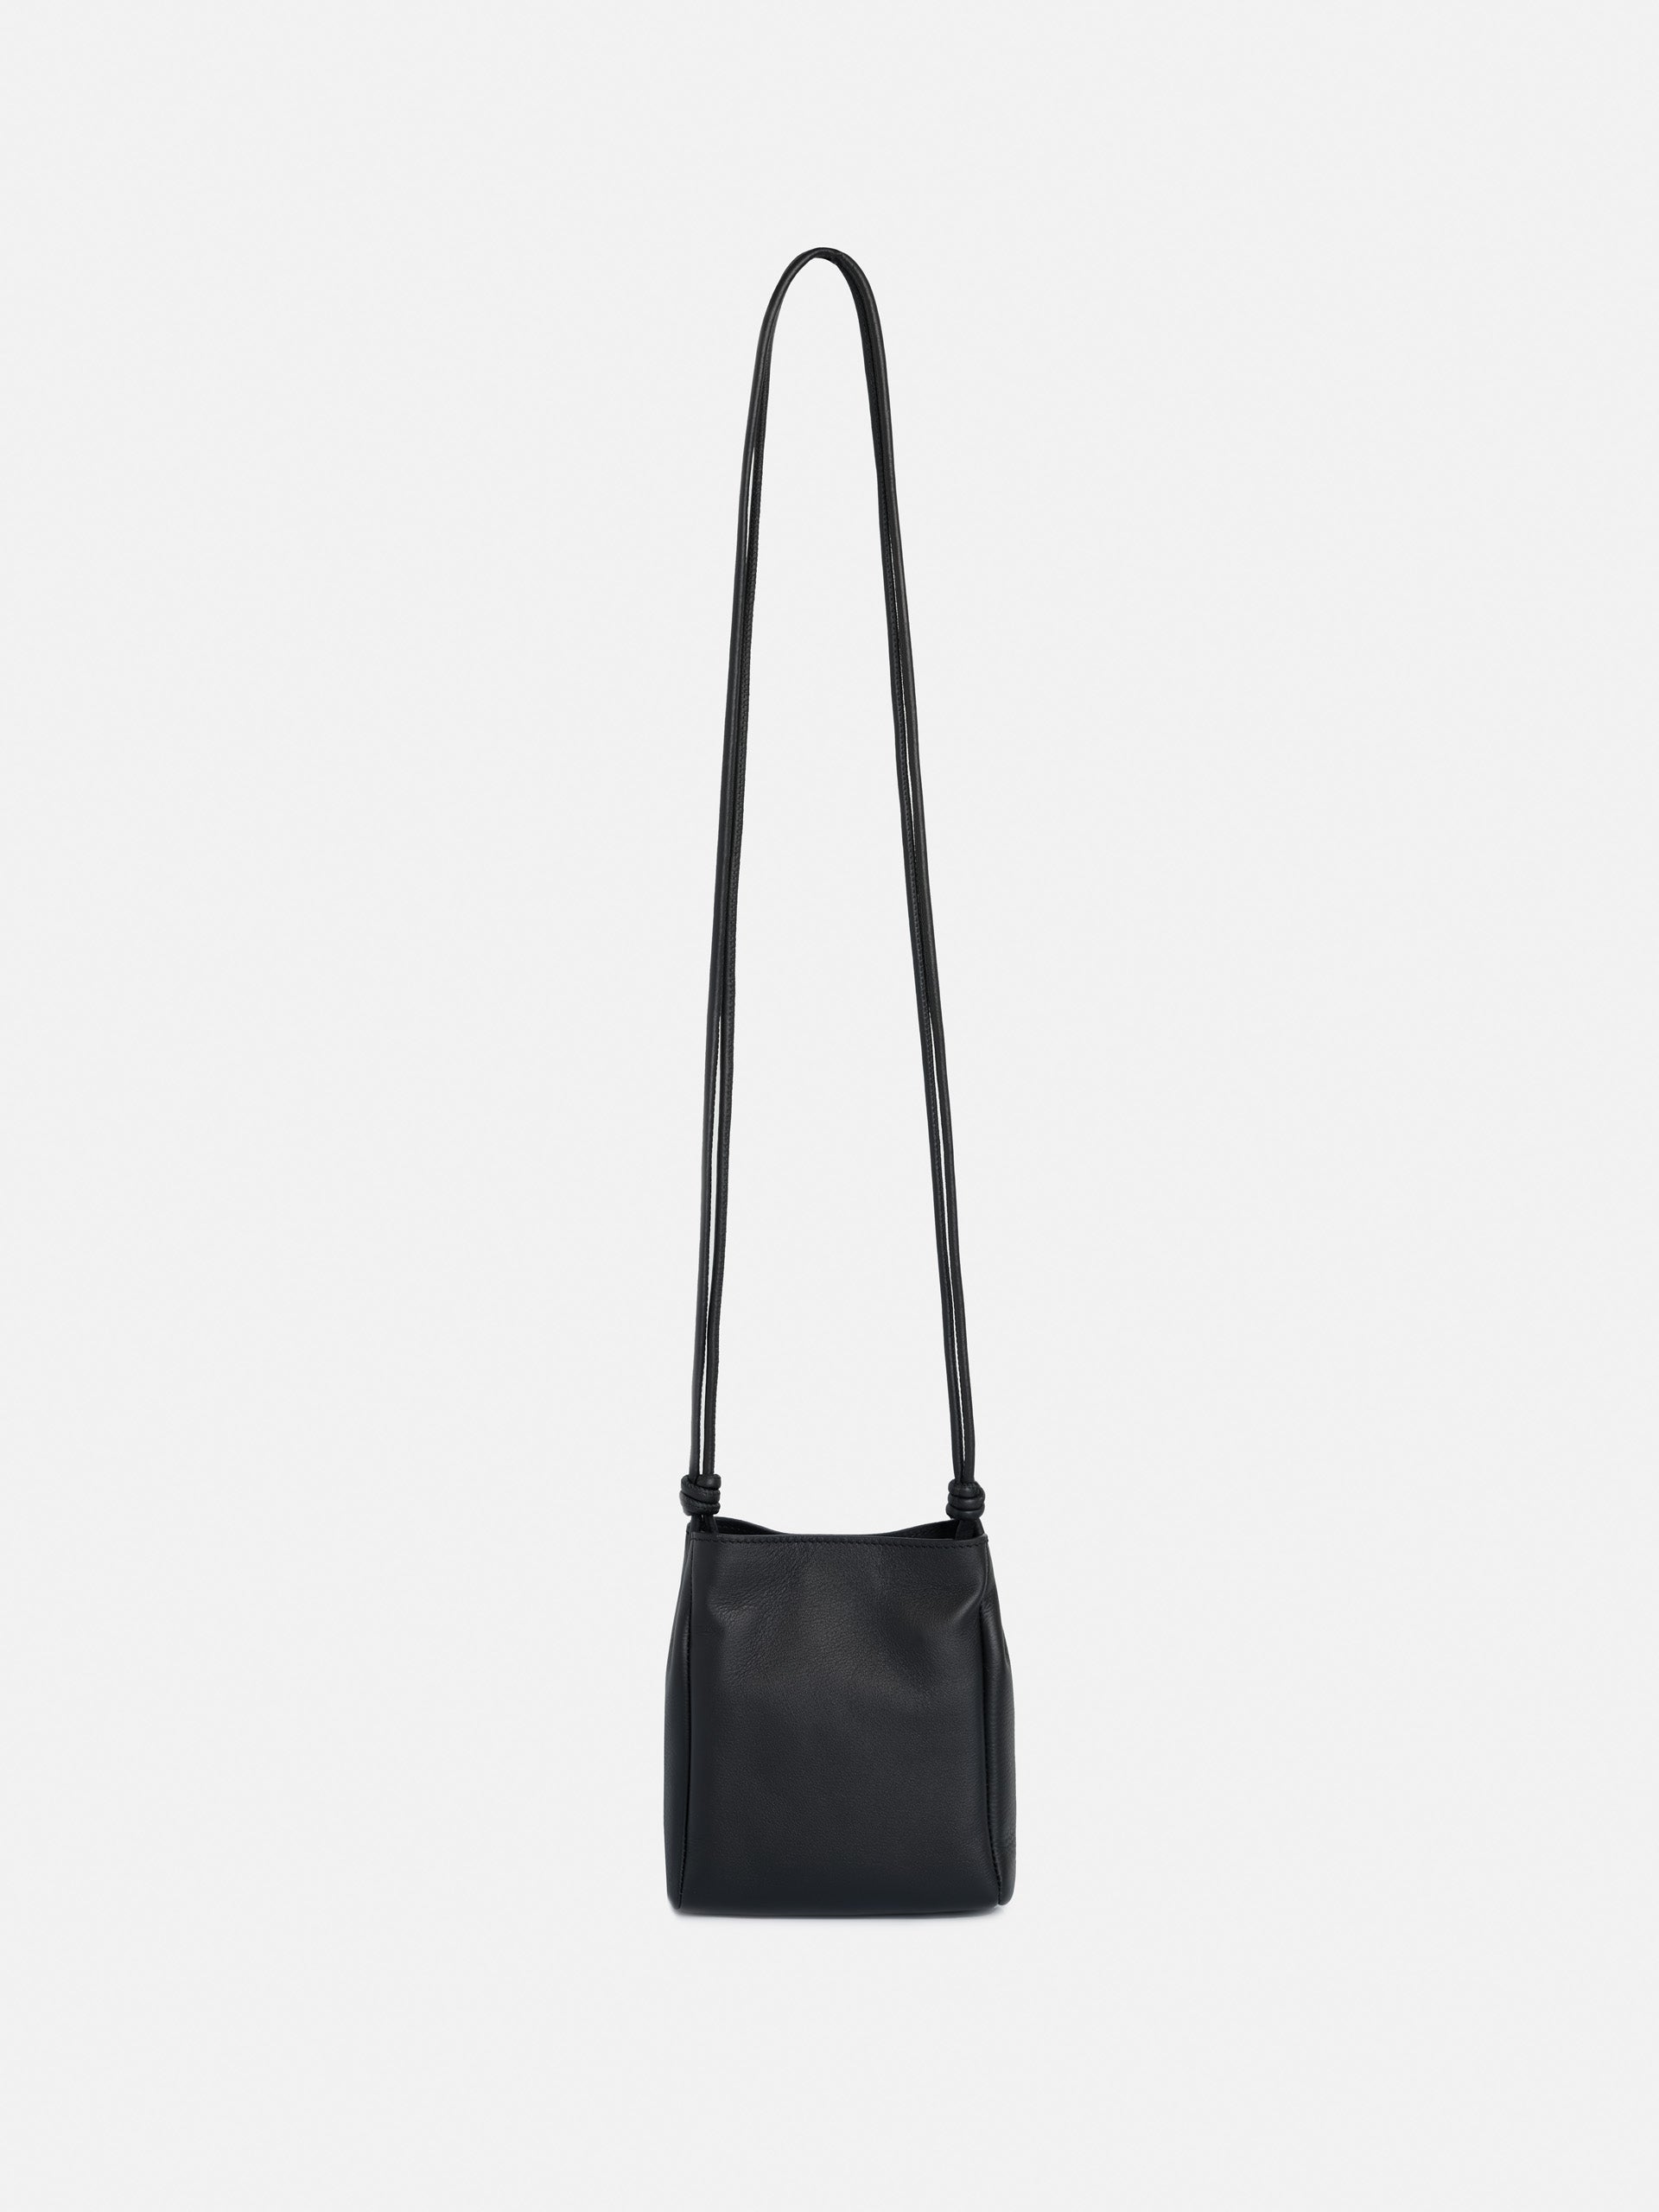 Black leather knot bag